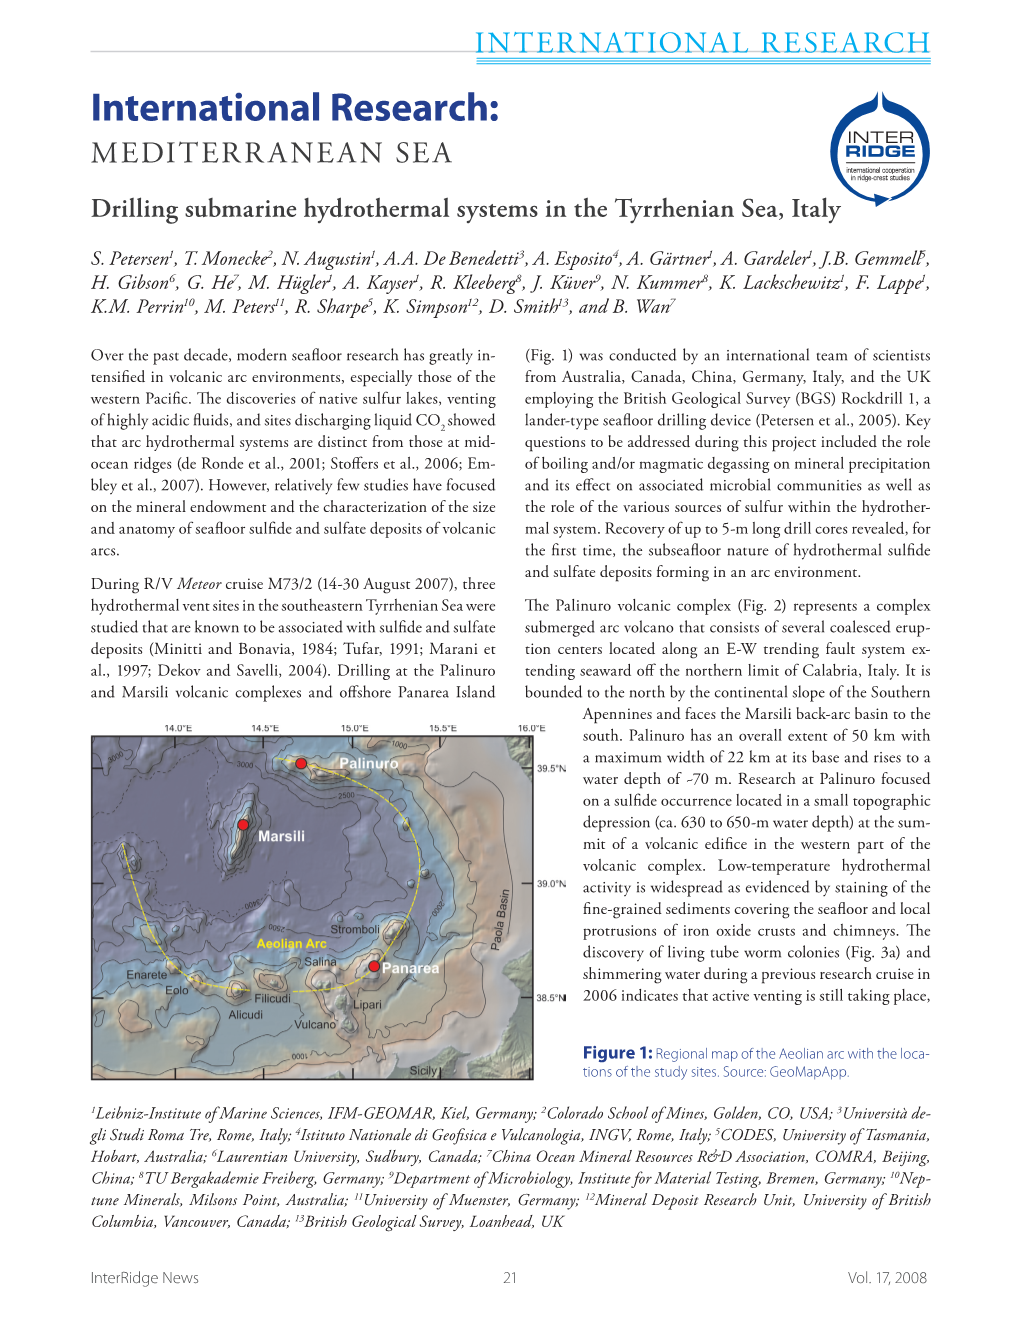 International Research: MEDITERRANEAN SEA Drilling Submarine Hydrothermal Systems in the Tyrrhenian Sea, Italy